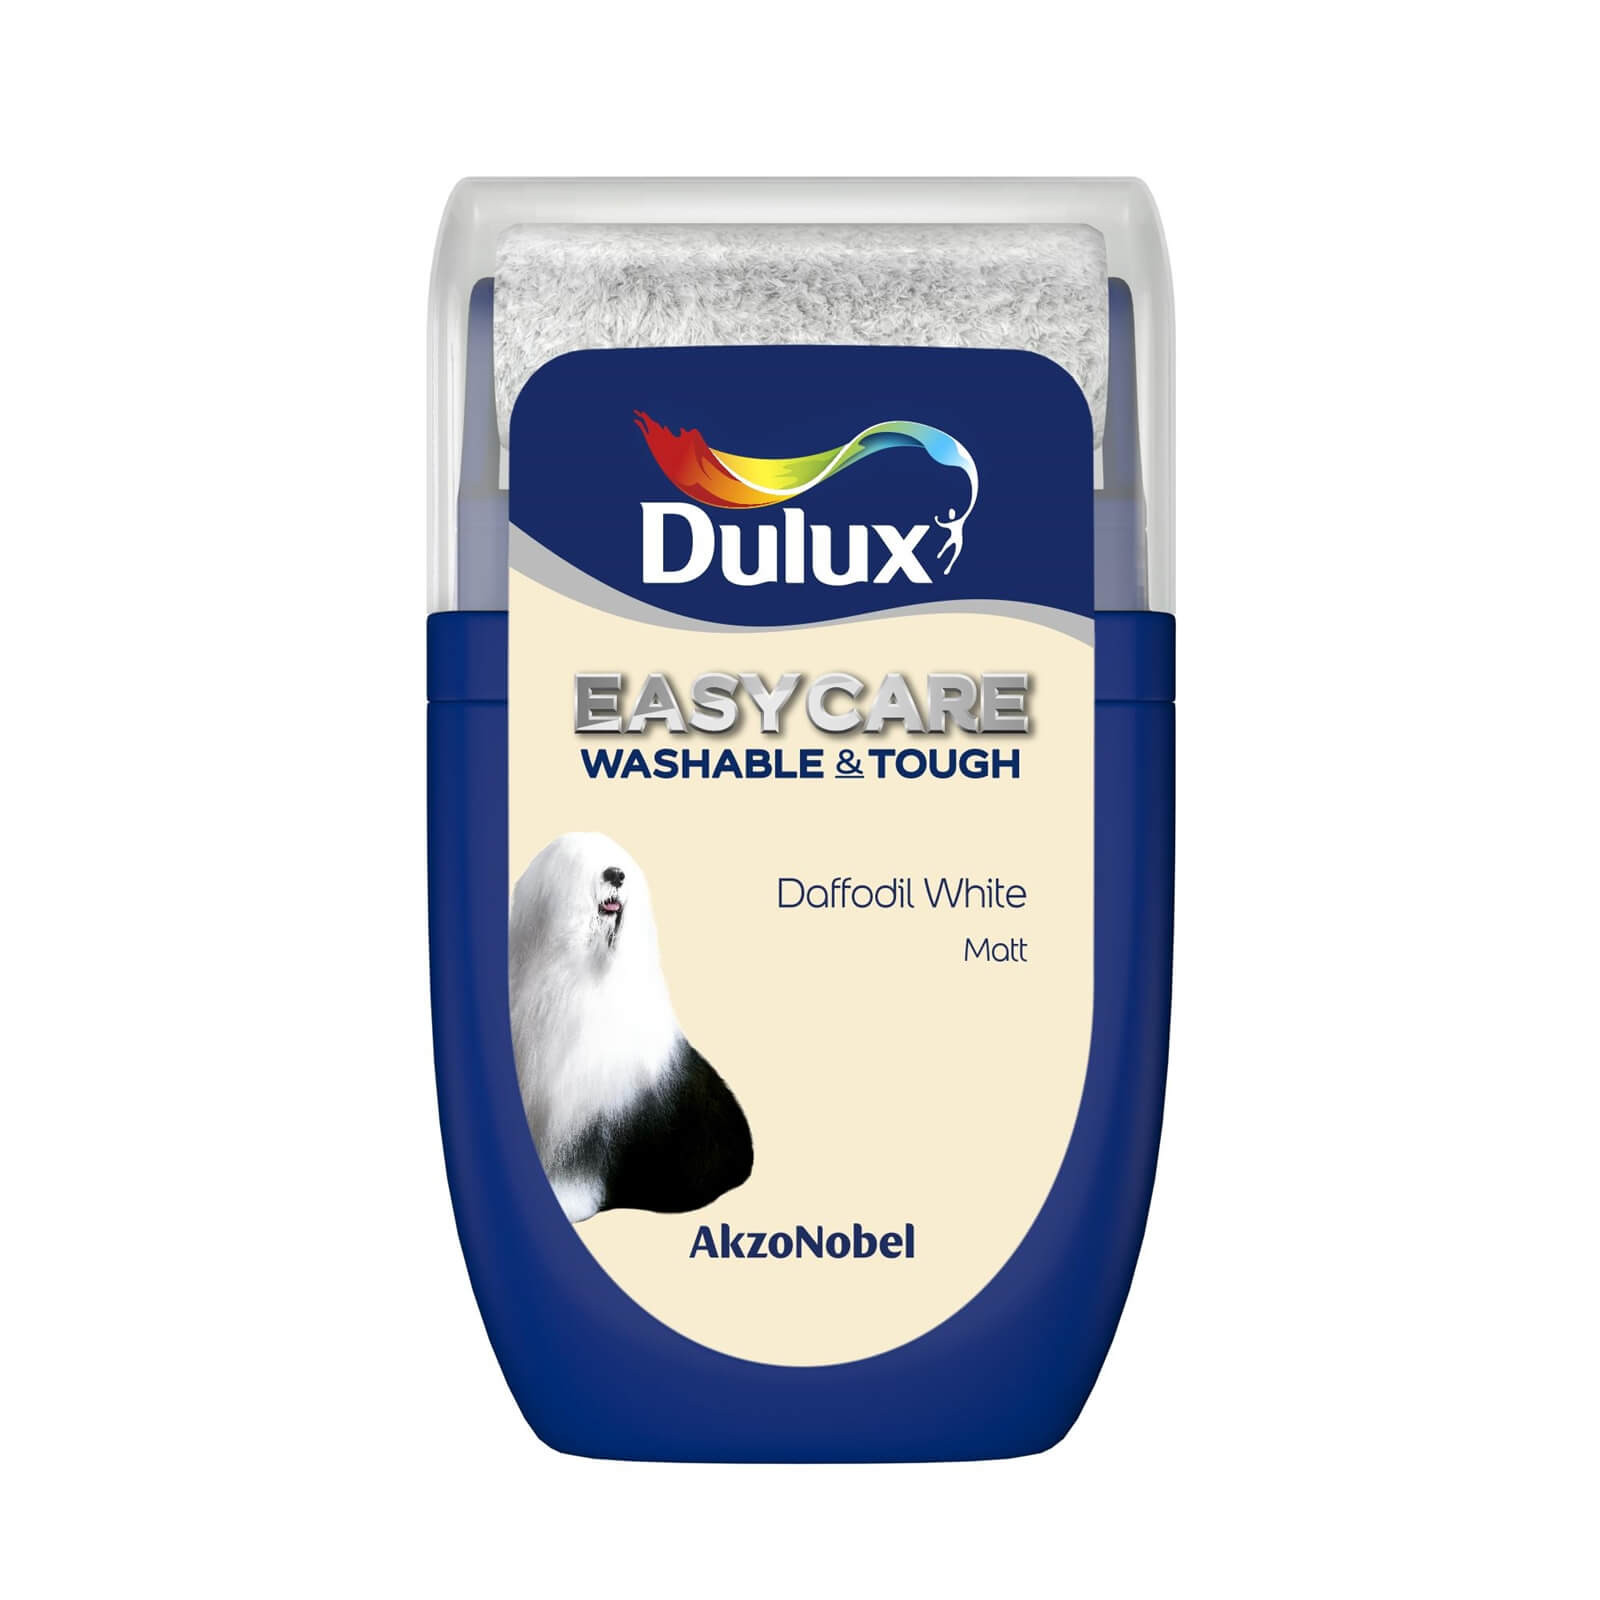 Dulux Easycare Washable & Tough Matt Paint Daffodil White - Tester 30ml